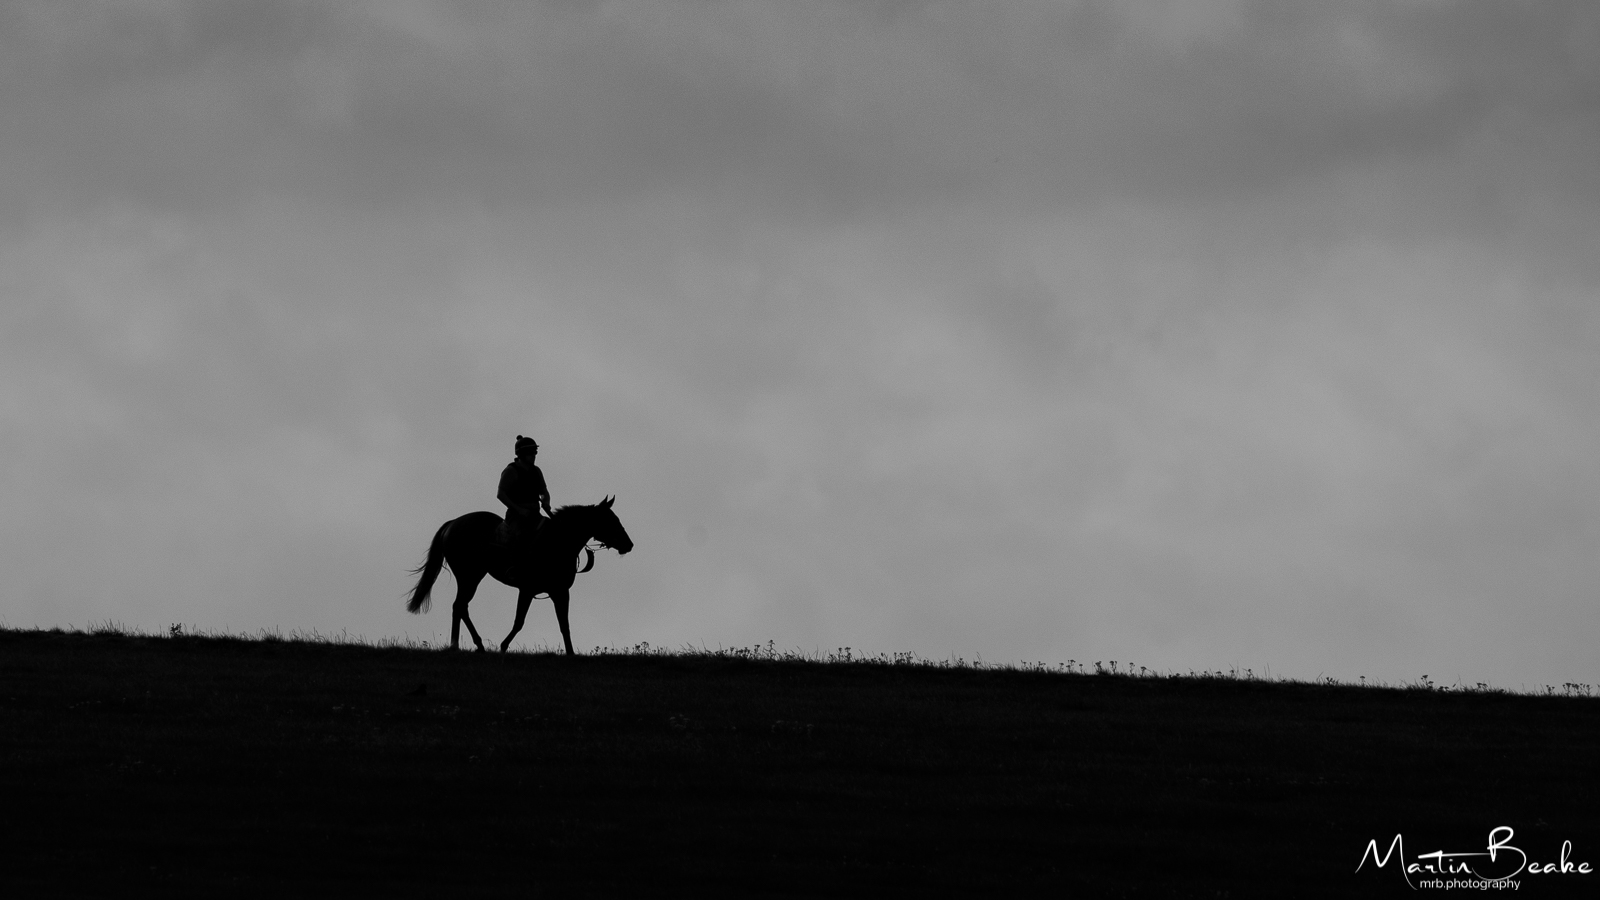 Lonesome Rider